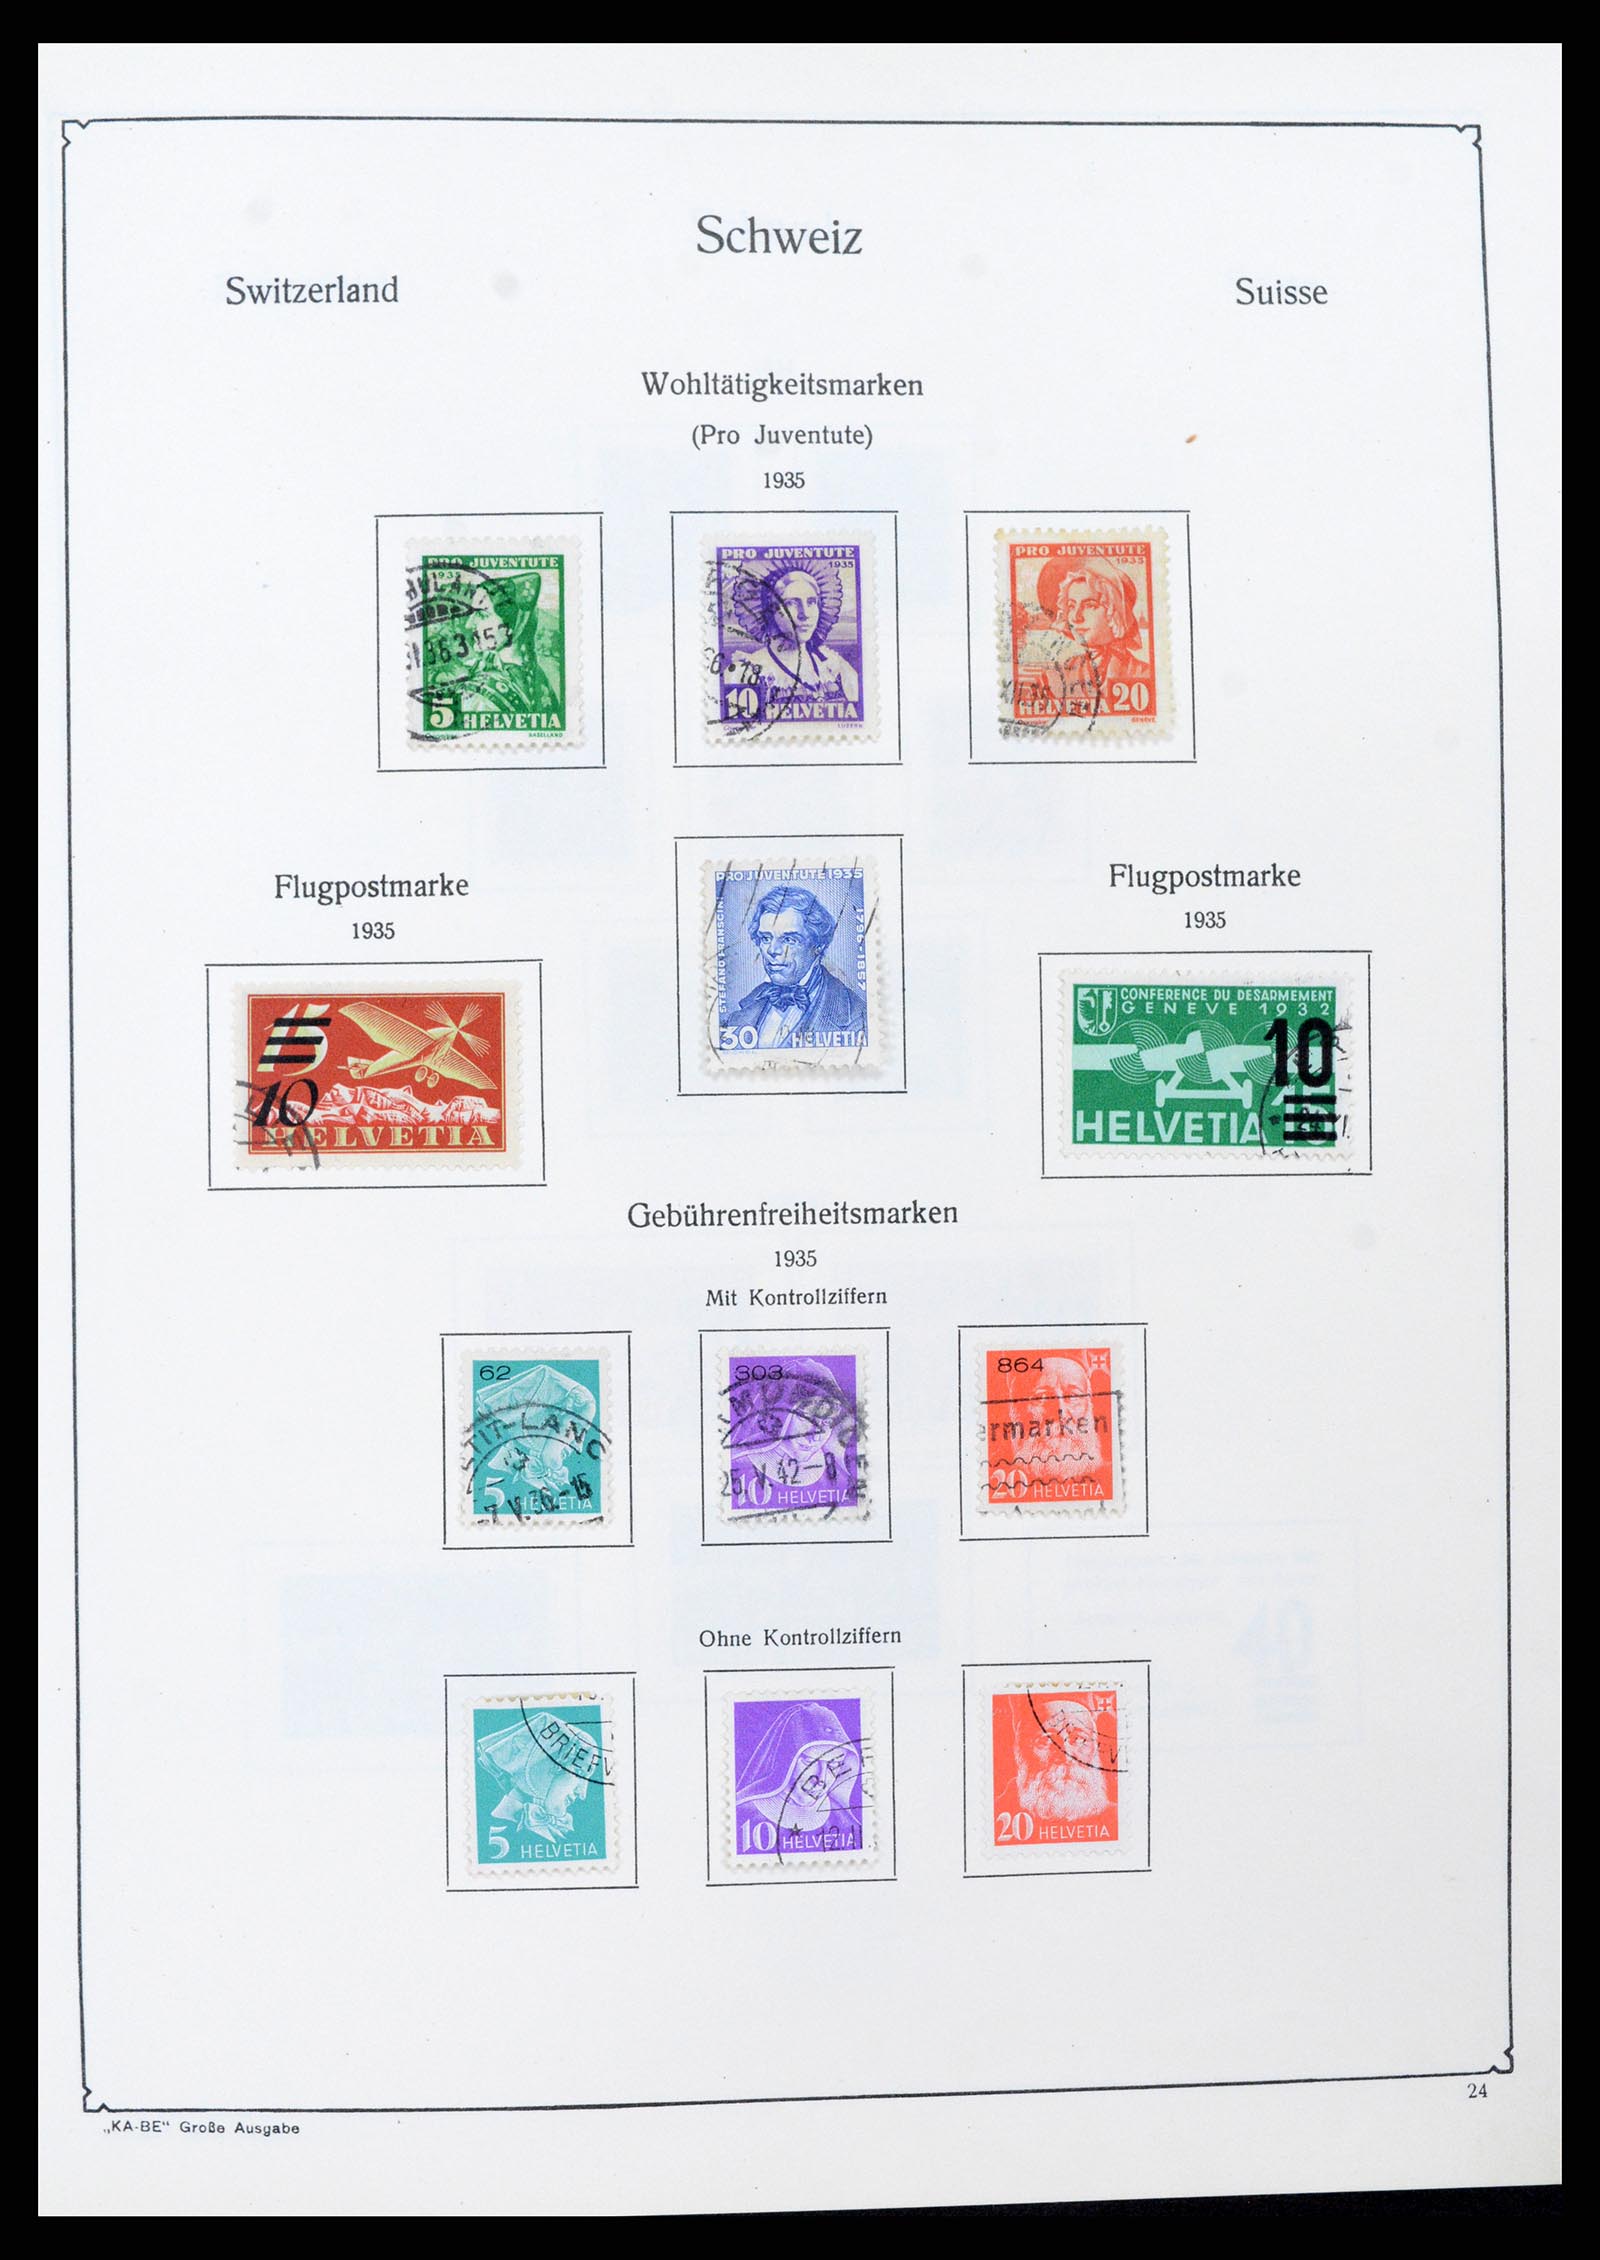 37588 023 - Stamp collection 37588 Switzerland 1854-1974.